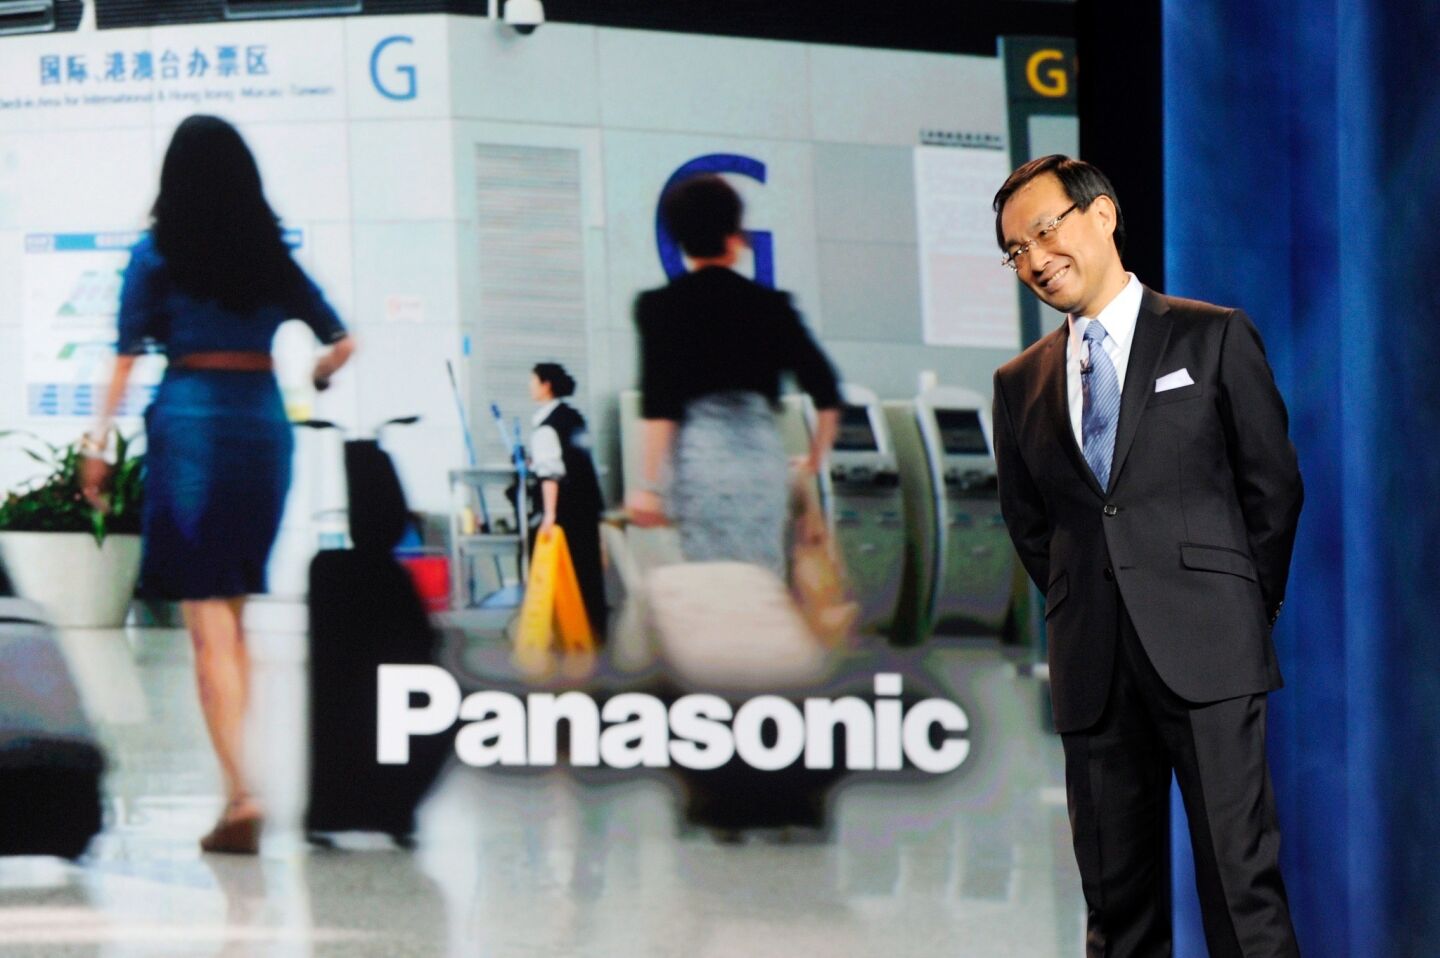 Panasonic keynote